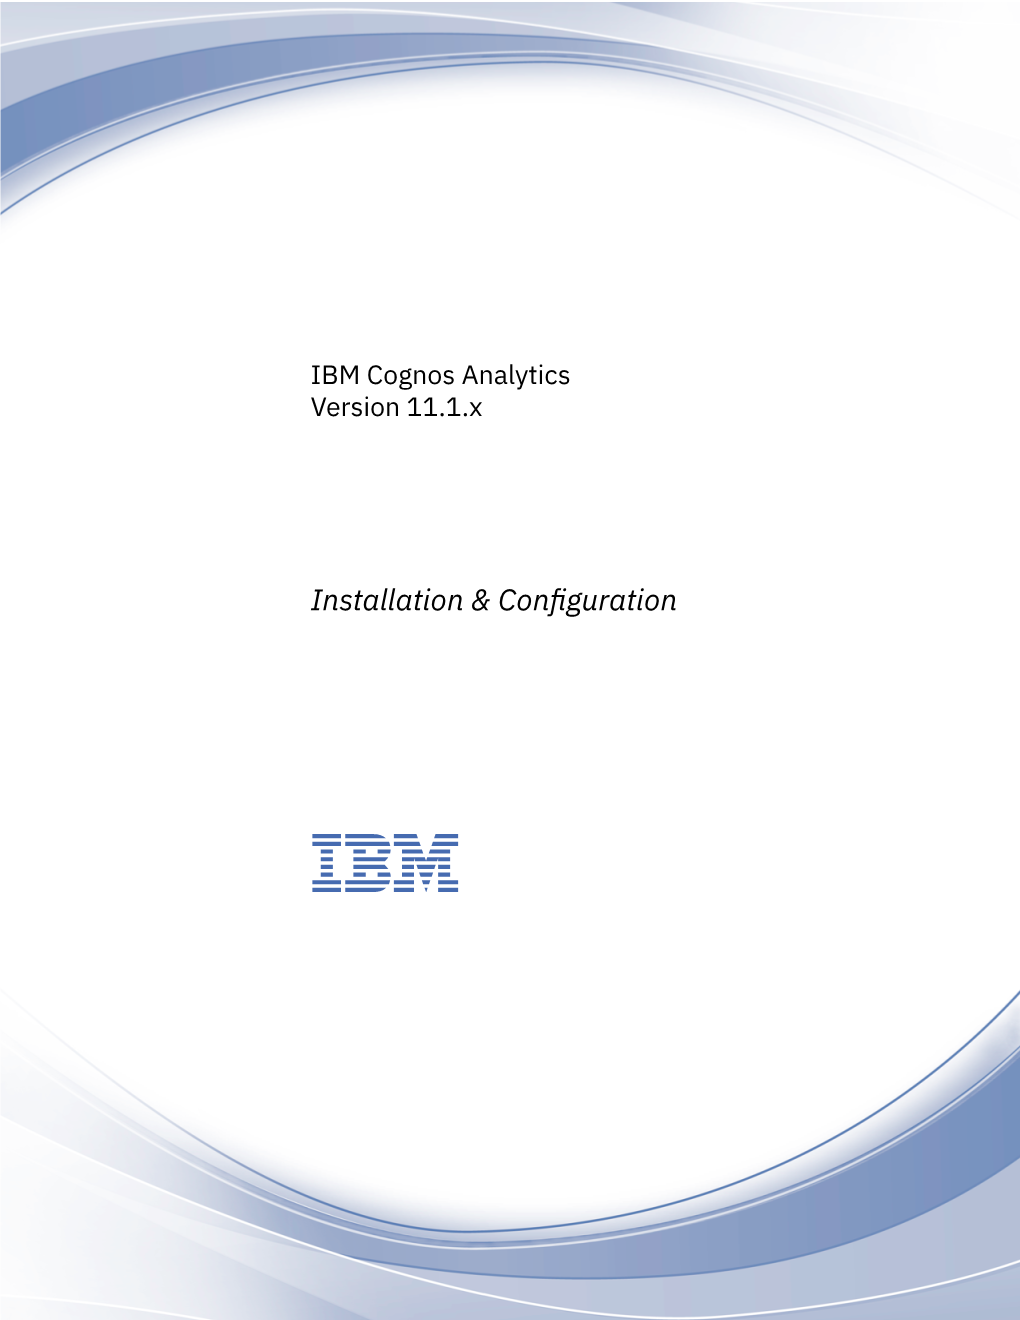 IBM Cognos Analytics Version 11.1.X : Installation & Configuration